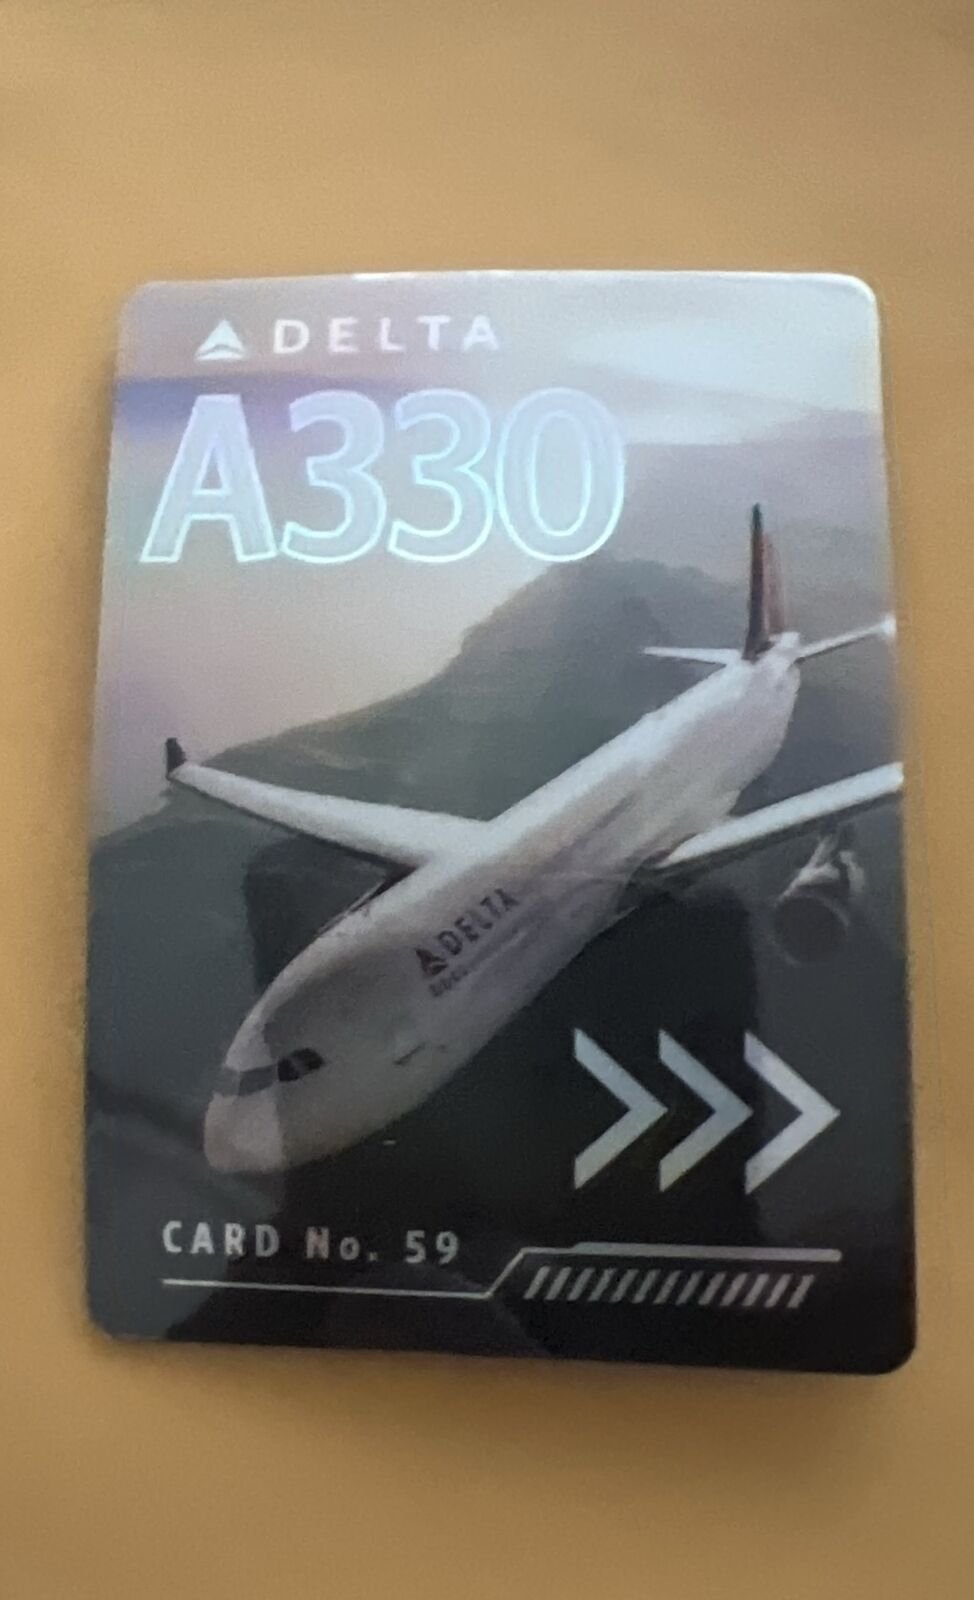 Delta Pilot Trading Card A330-300 Collectible Airbus Delta Air Lines No.59 New